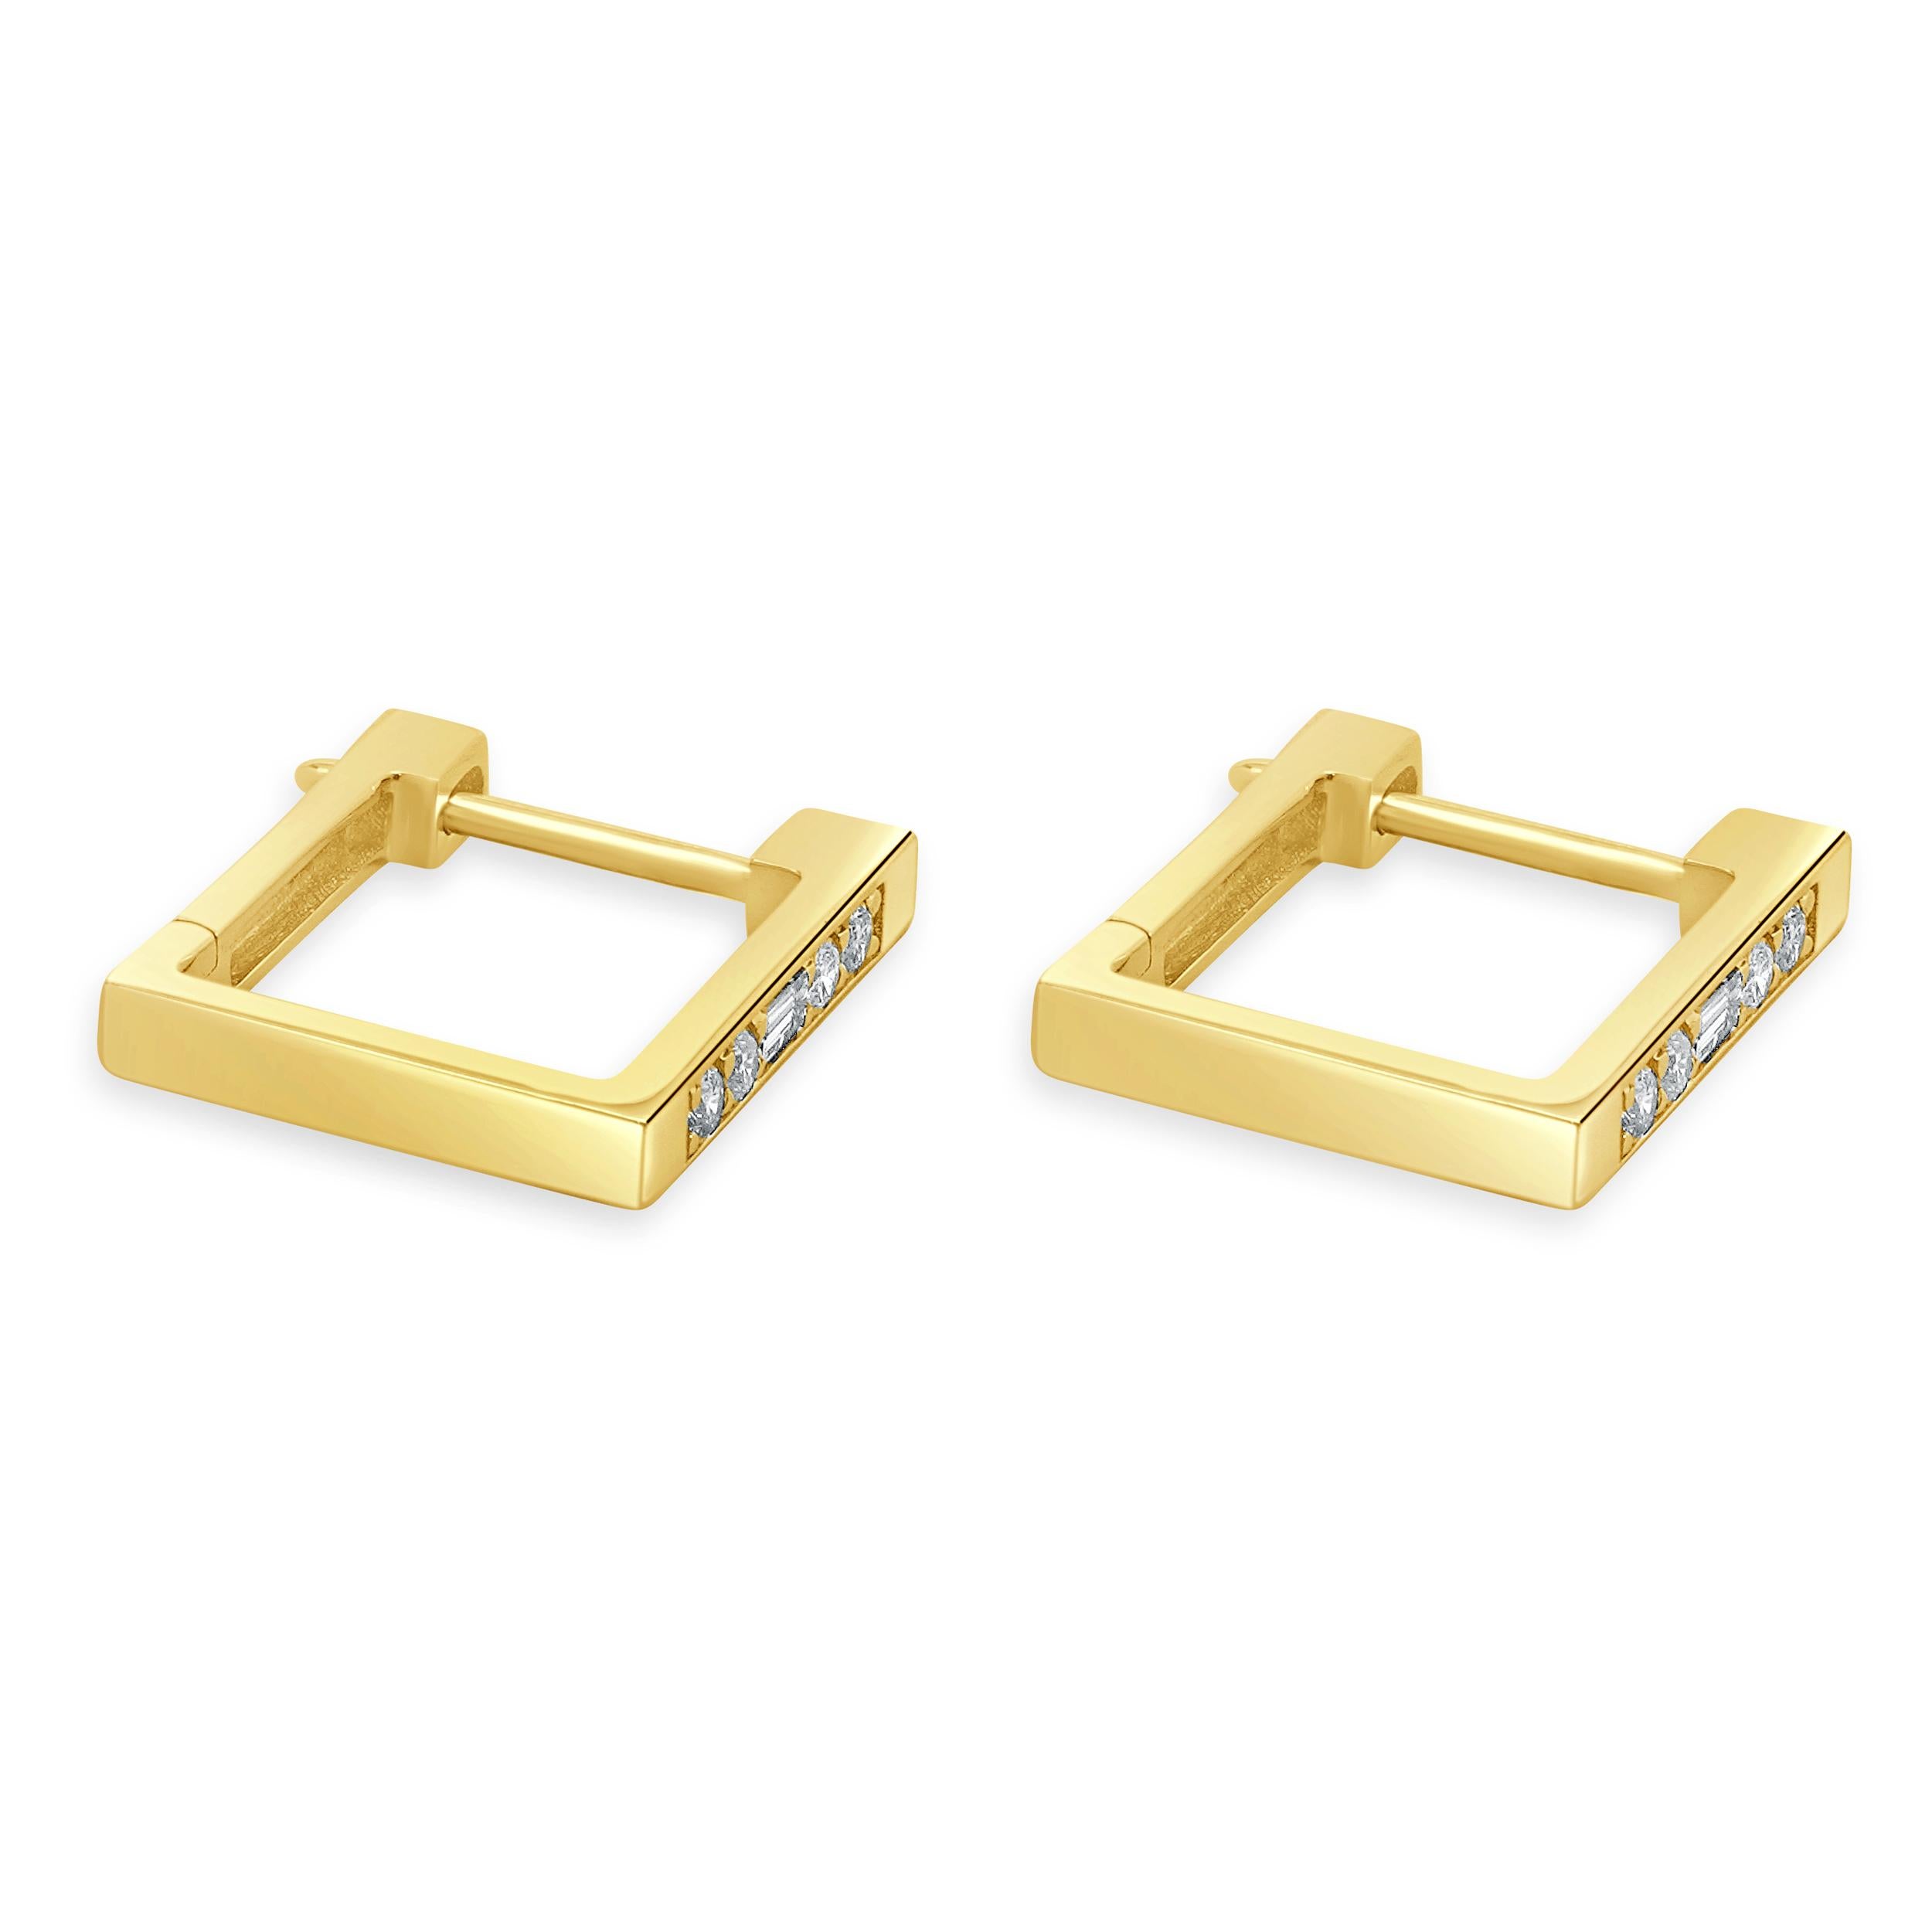 Designer: custom design
Material: 14K yellow gold
Diamonds: 10 round cut = 0.29cttw
Color: H
Clarity: SI1-2
Dimensions: earrings measure 15.6mm 
Weight: 3.75 grams
